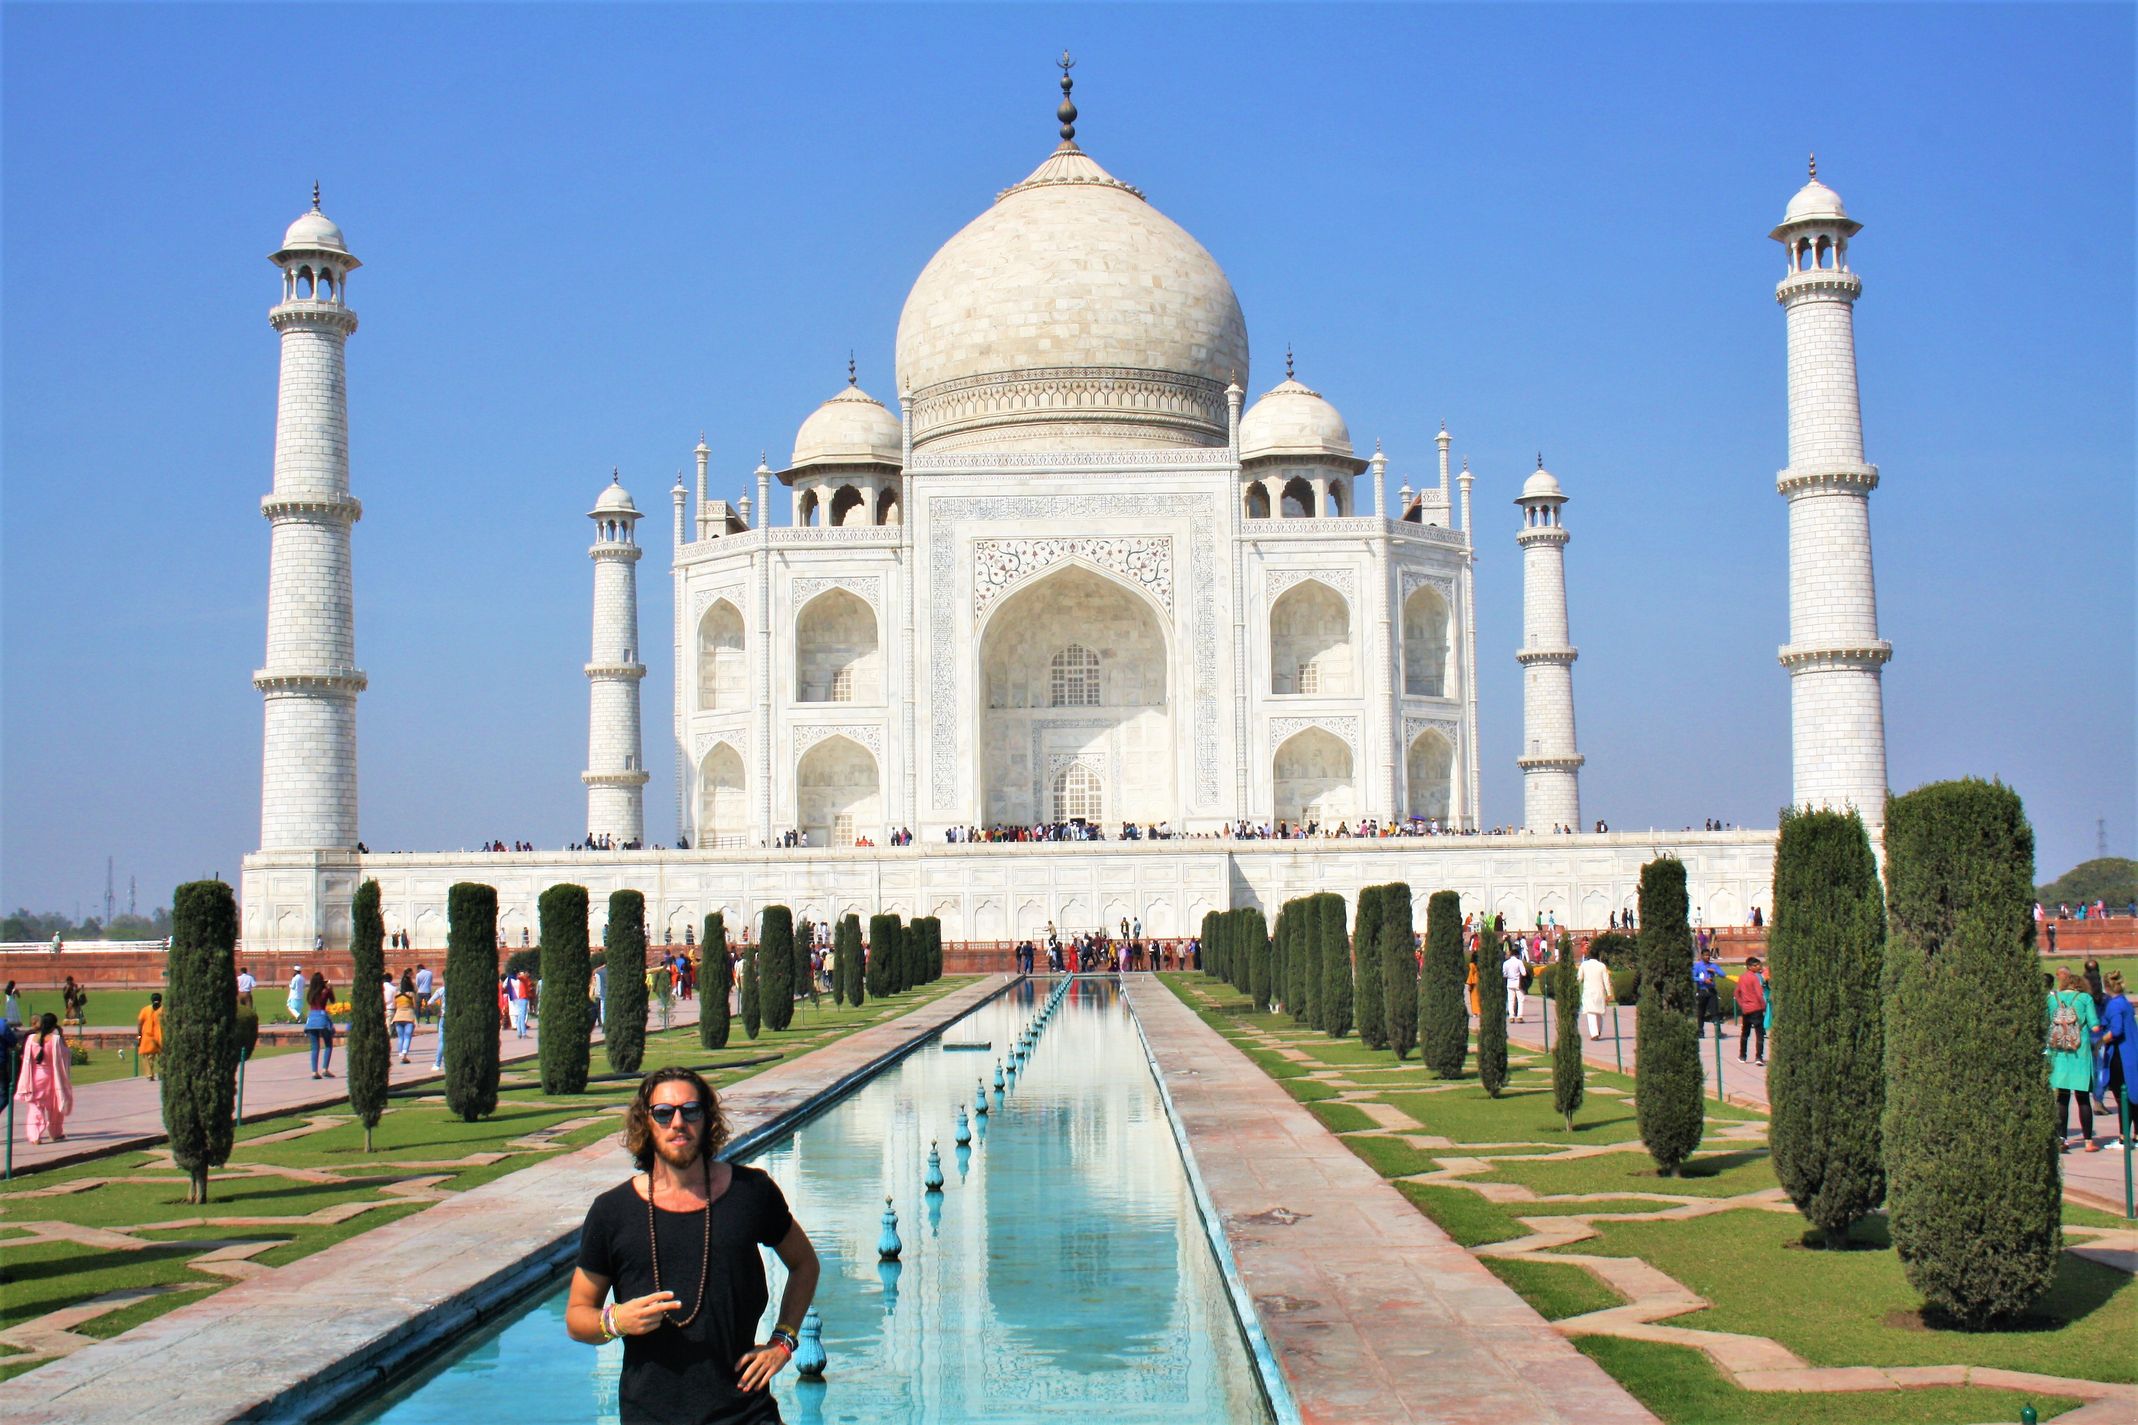 in front of the Taj Mahal, India